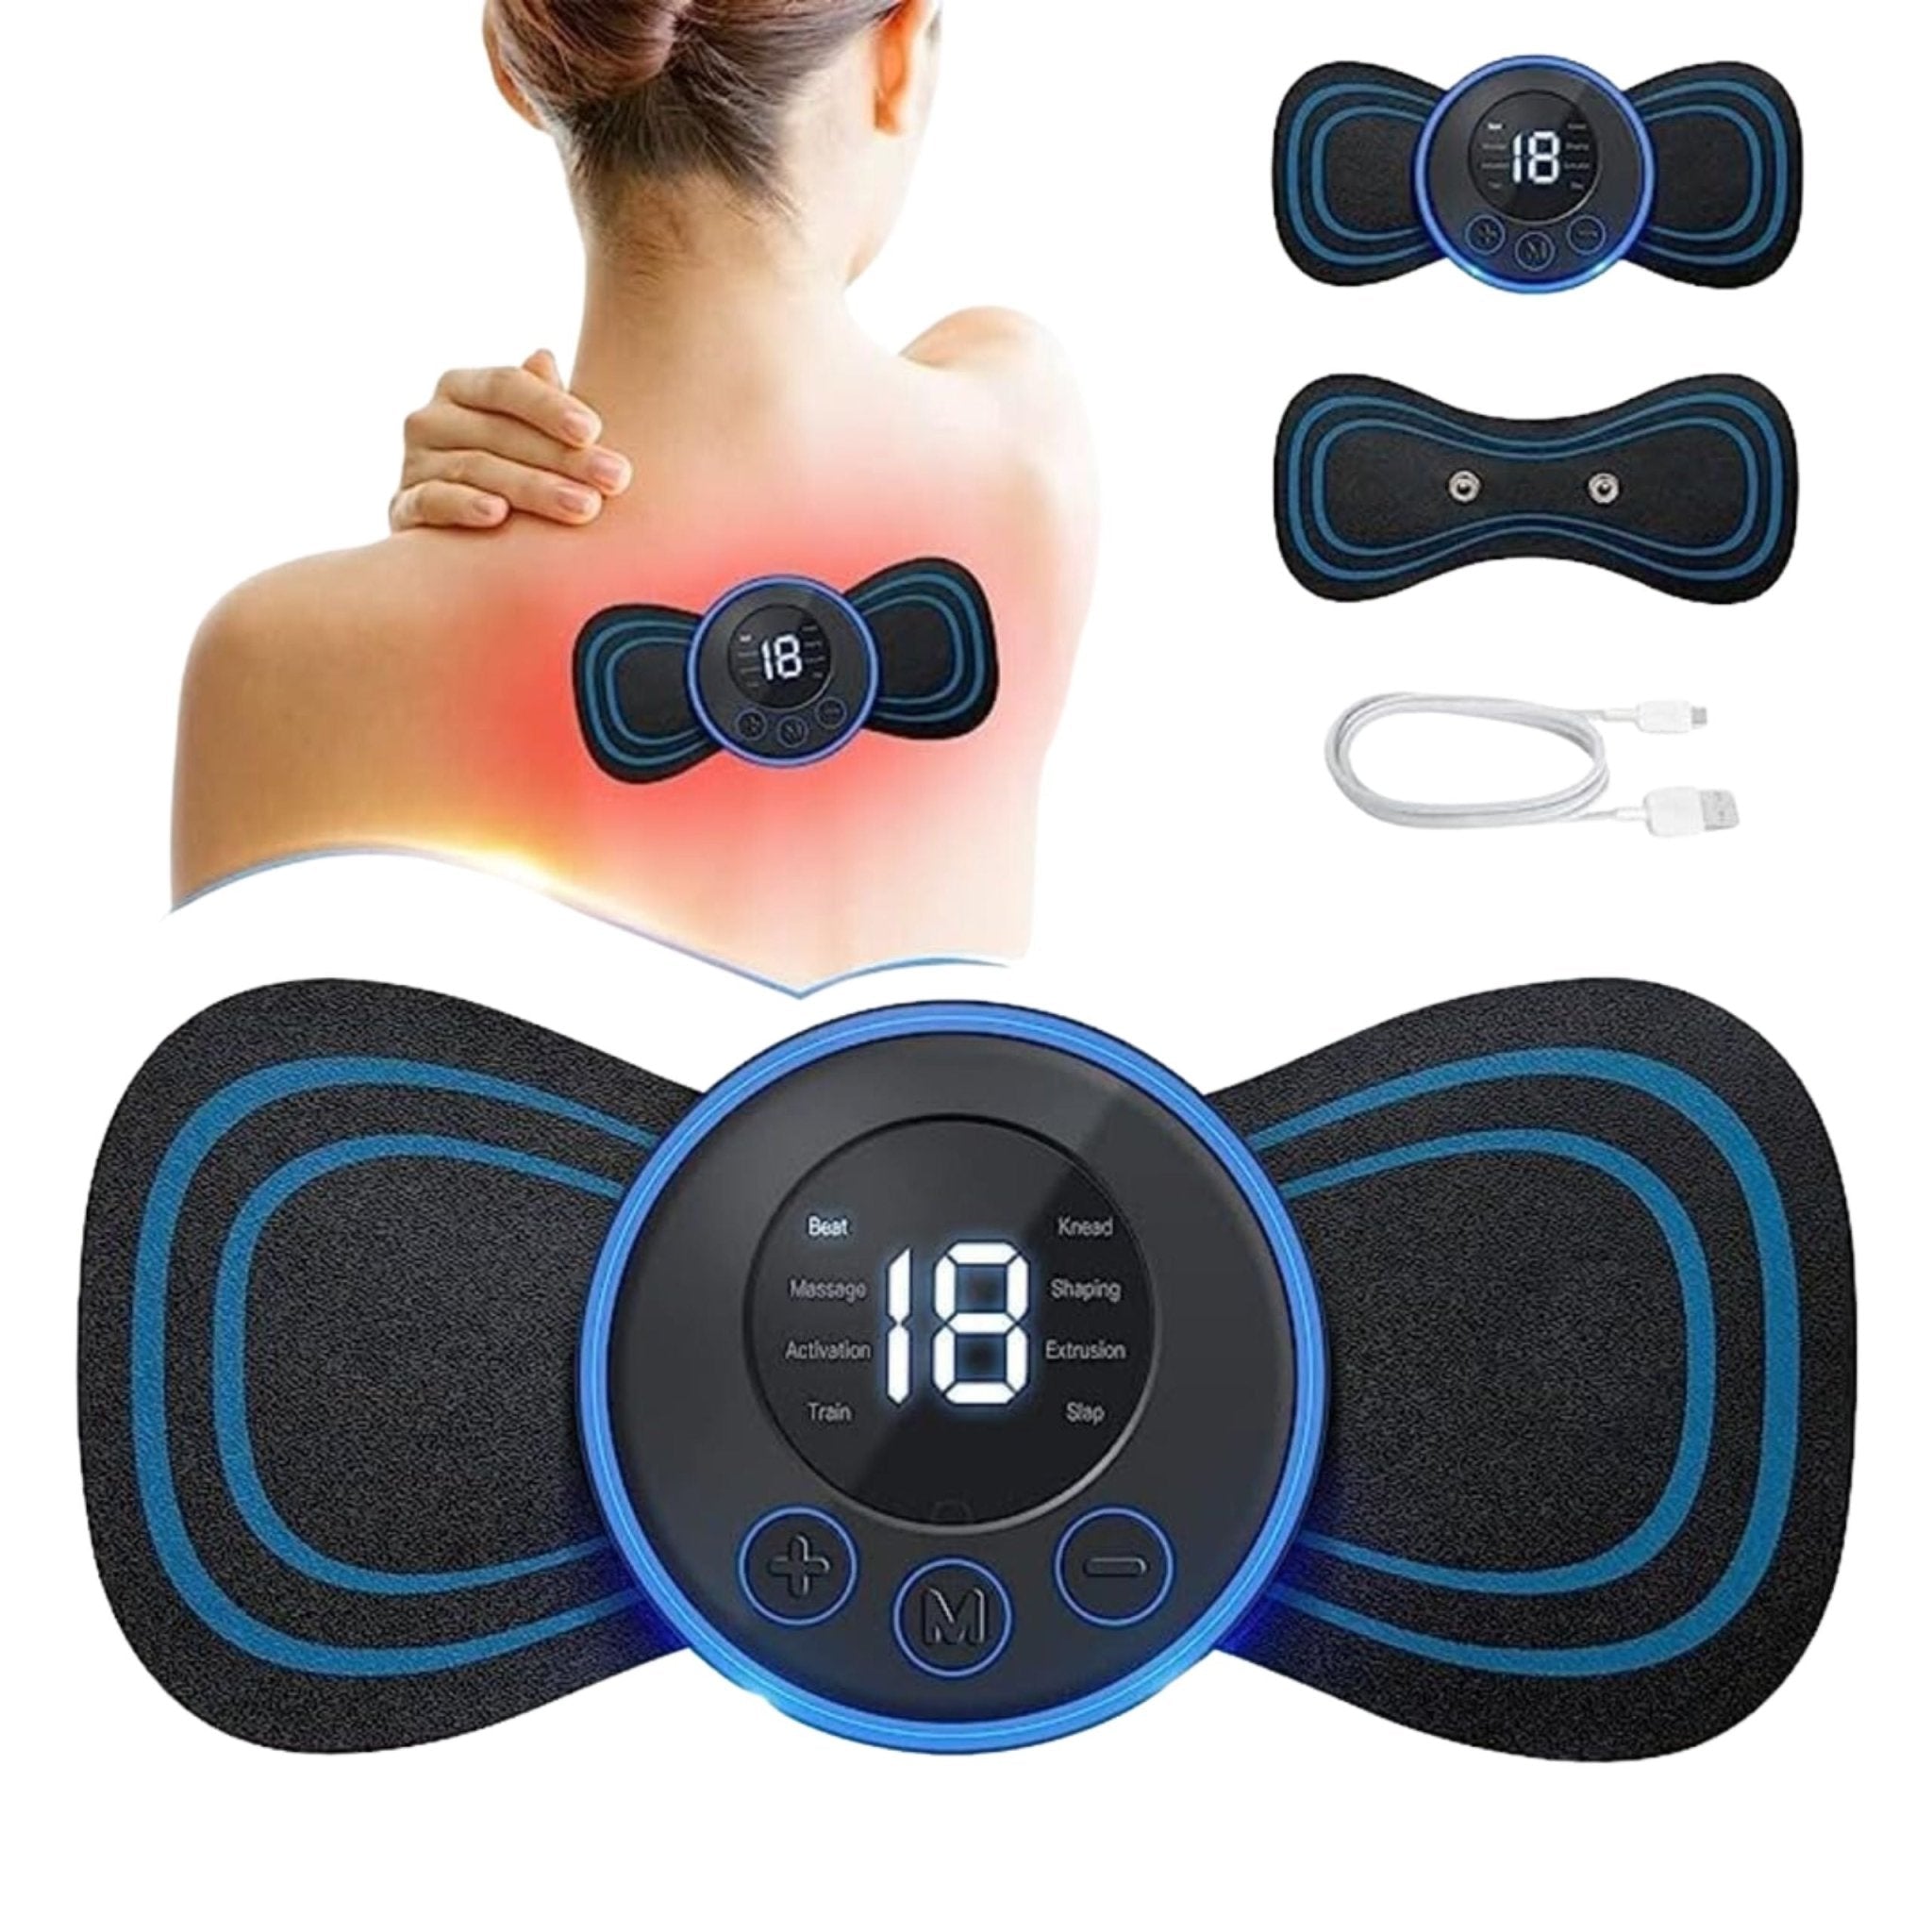 Portable Mini Electric Neck Massager - Black